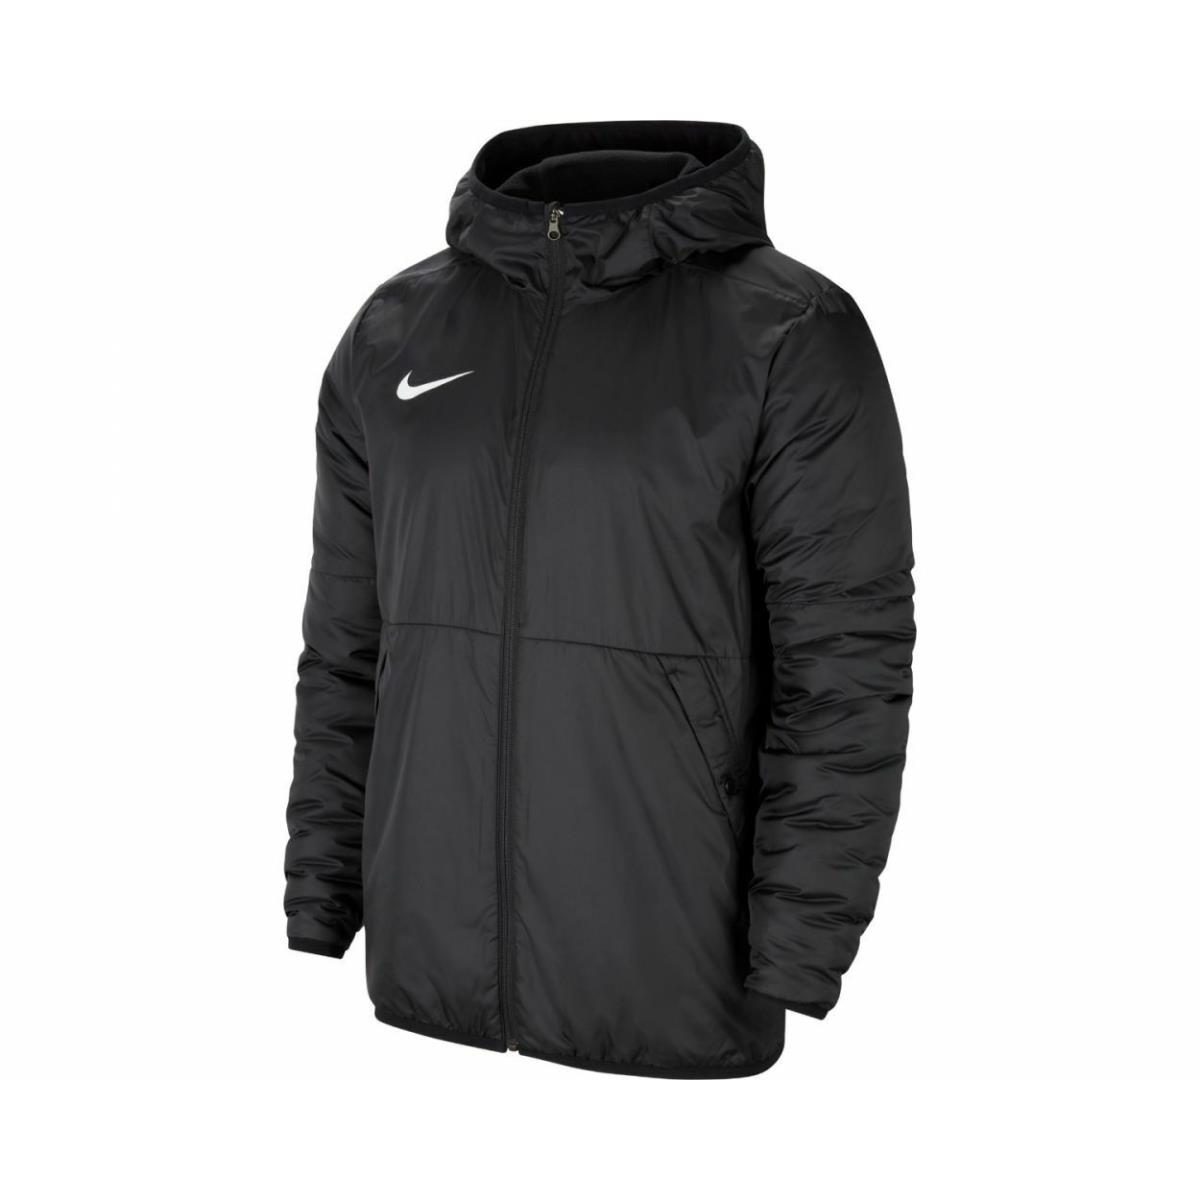 Nike Thermal Park 20 Full-zip Repel Jacket - CW6157-010 - Black - Large - Soccer